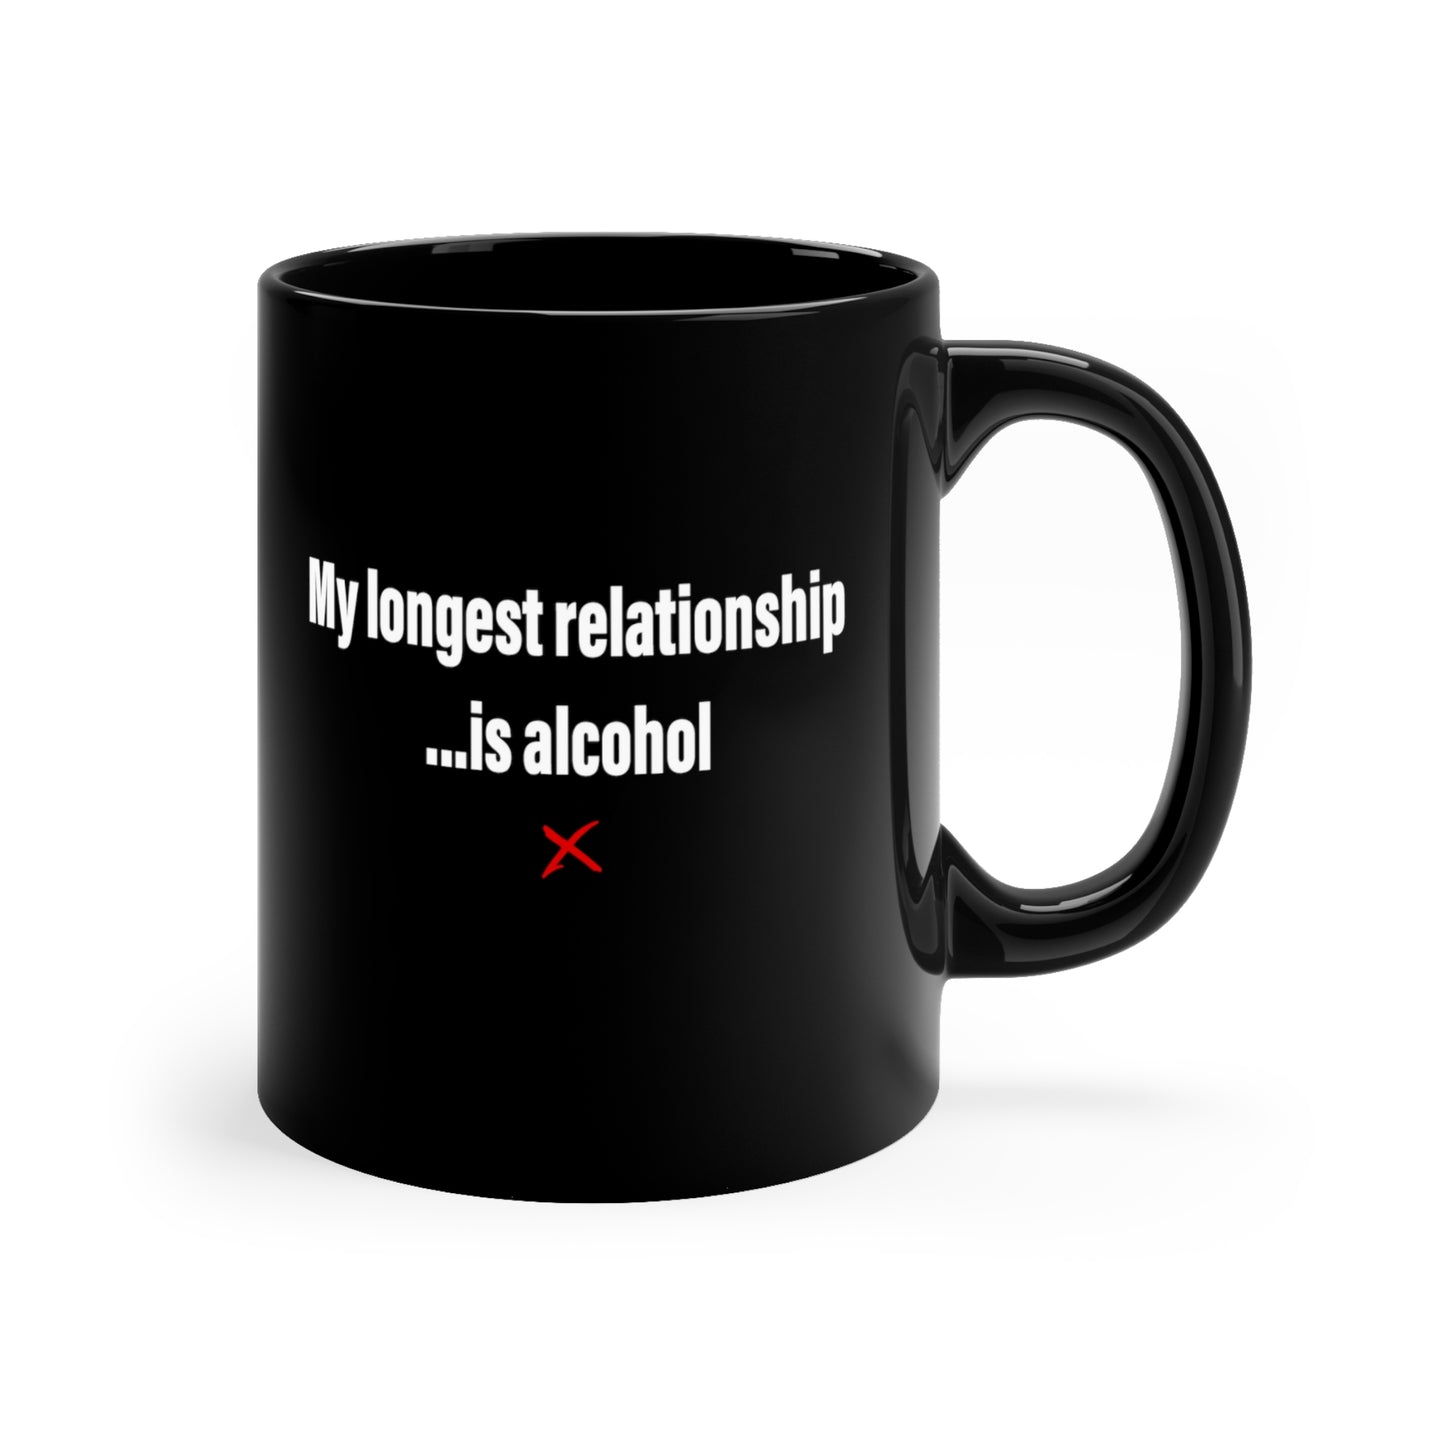 My longest relationship ...is alcohol - Mug